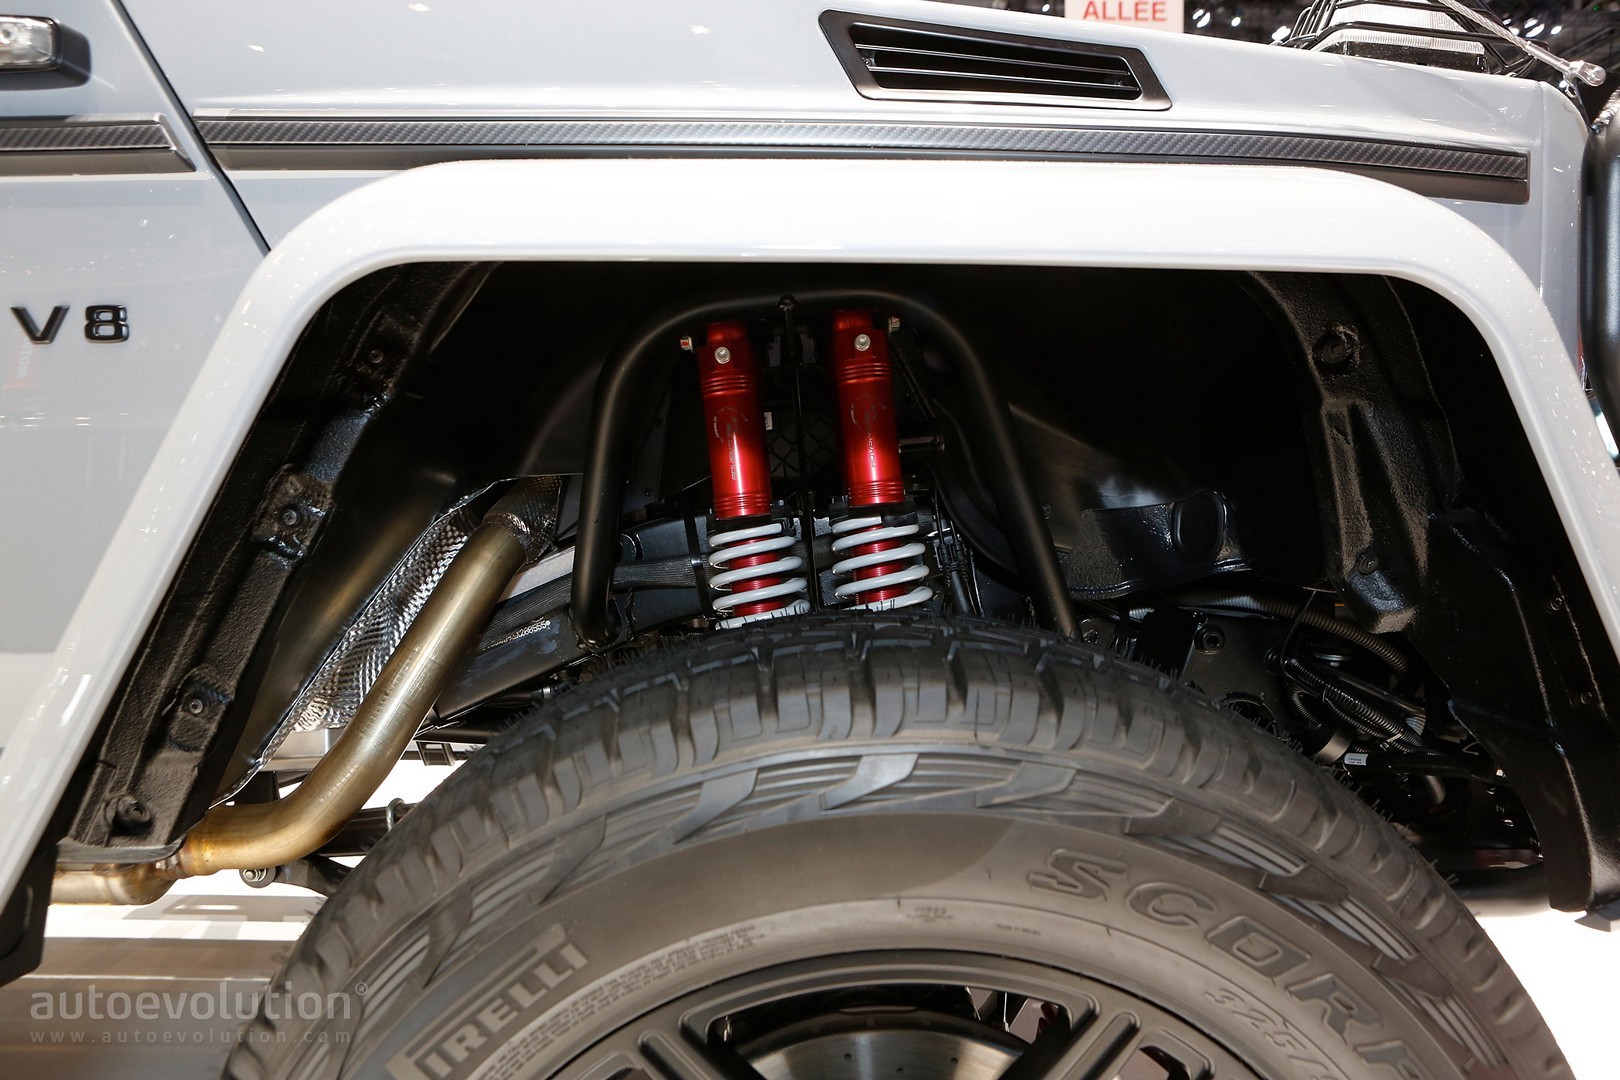 Brabus G500 4x4 Has Red Engine and Smurf Skin Interior - autoevolution